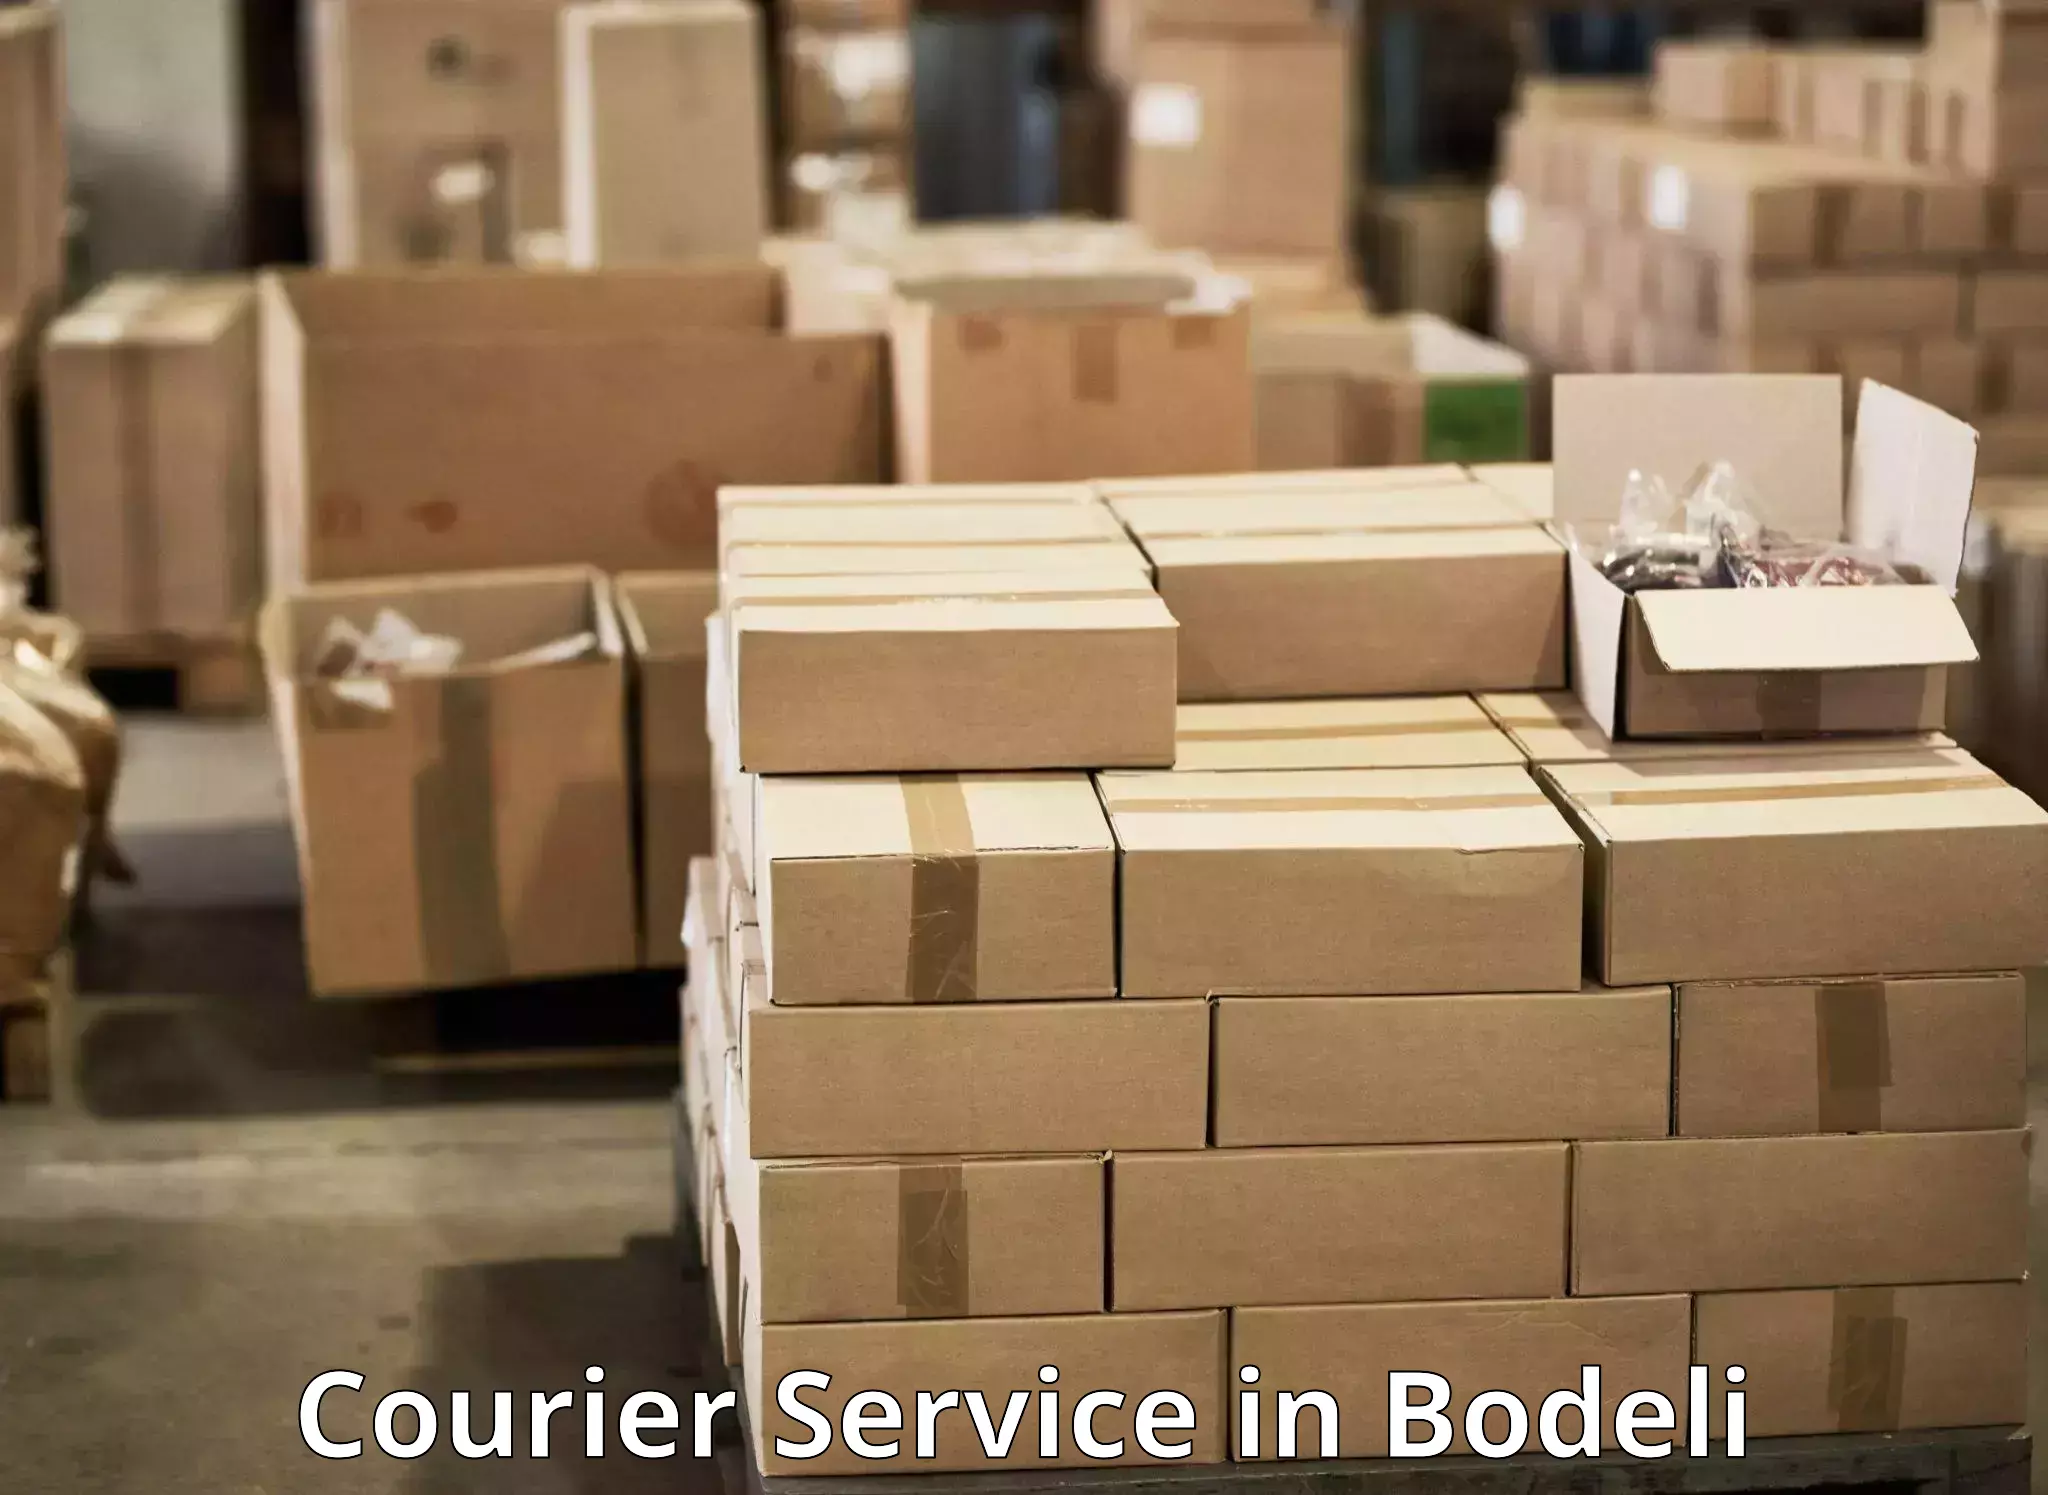 Courier service innovation in Bodeli